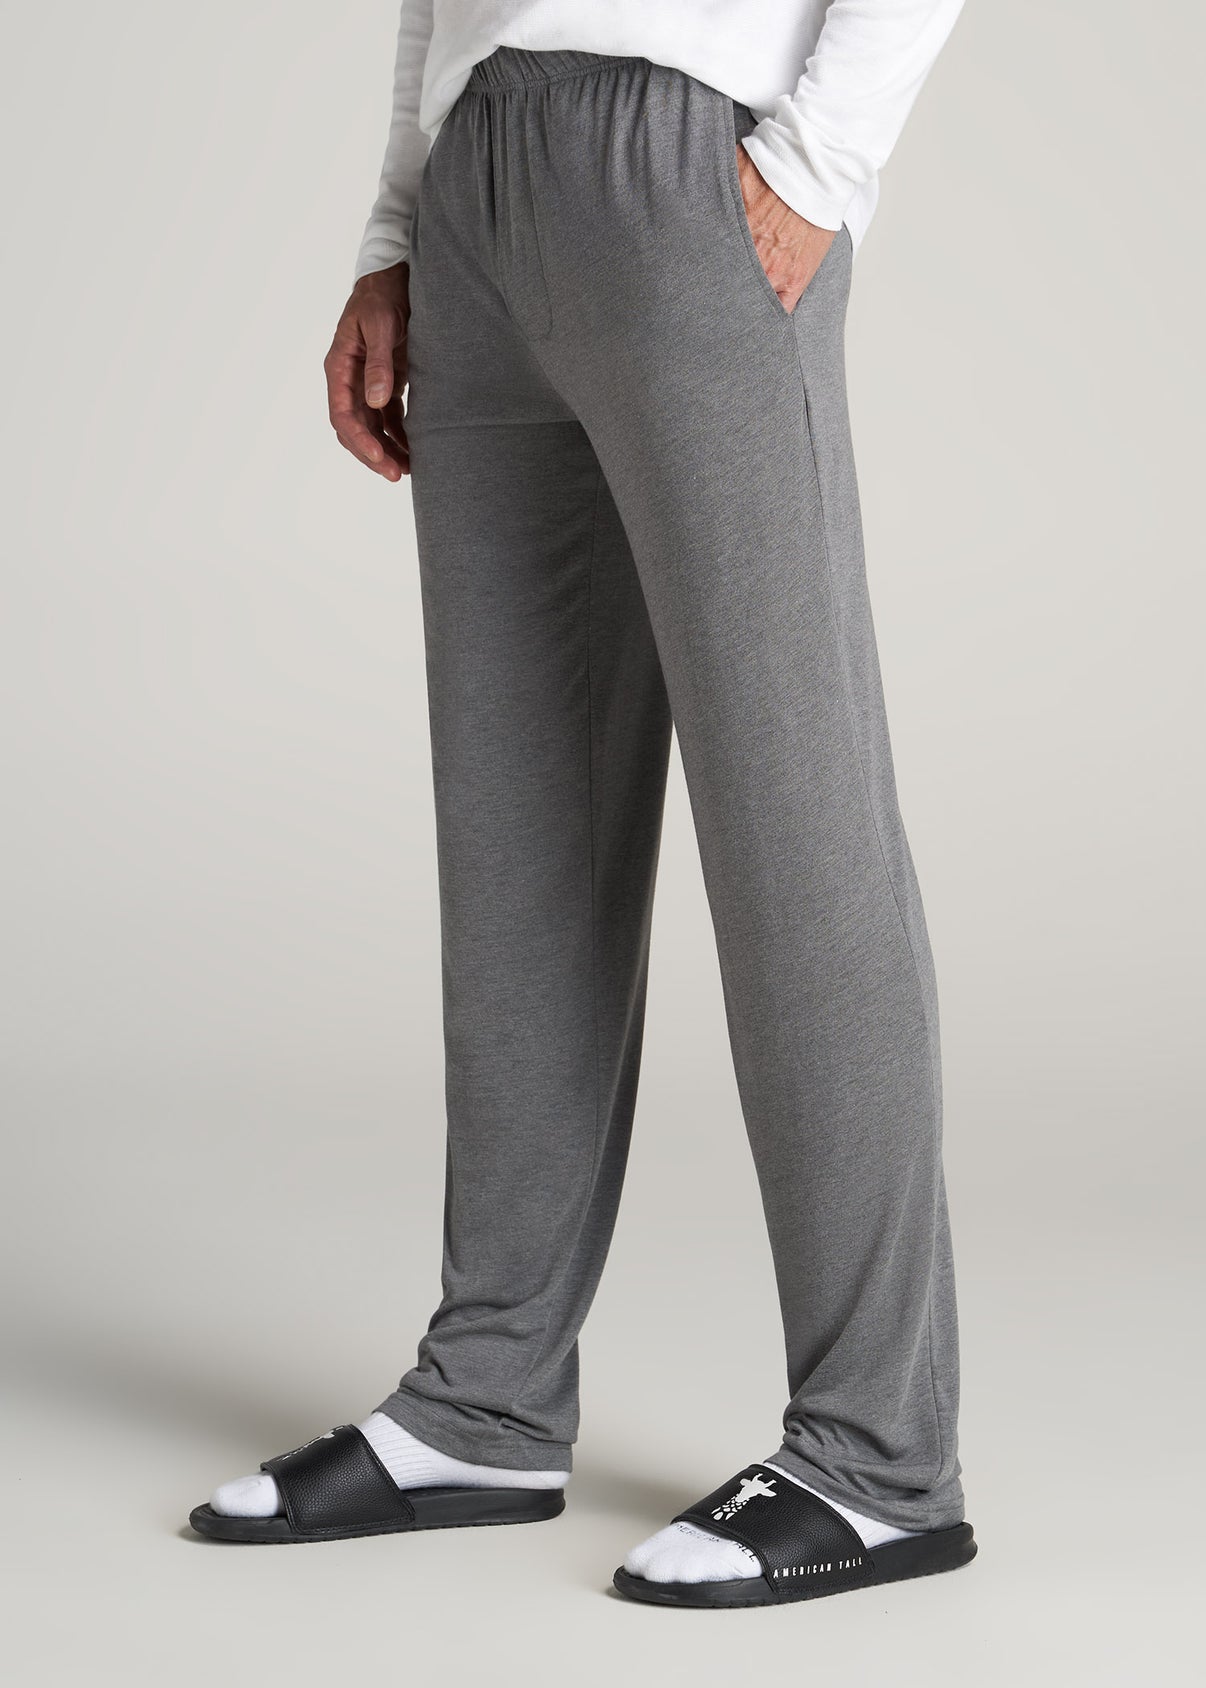 Lounge Pajama Pants for Tall Men | American Tall